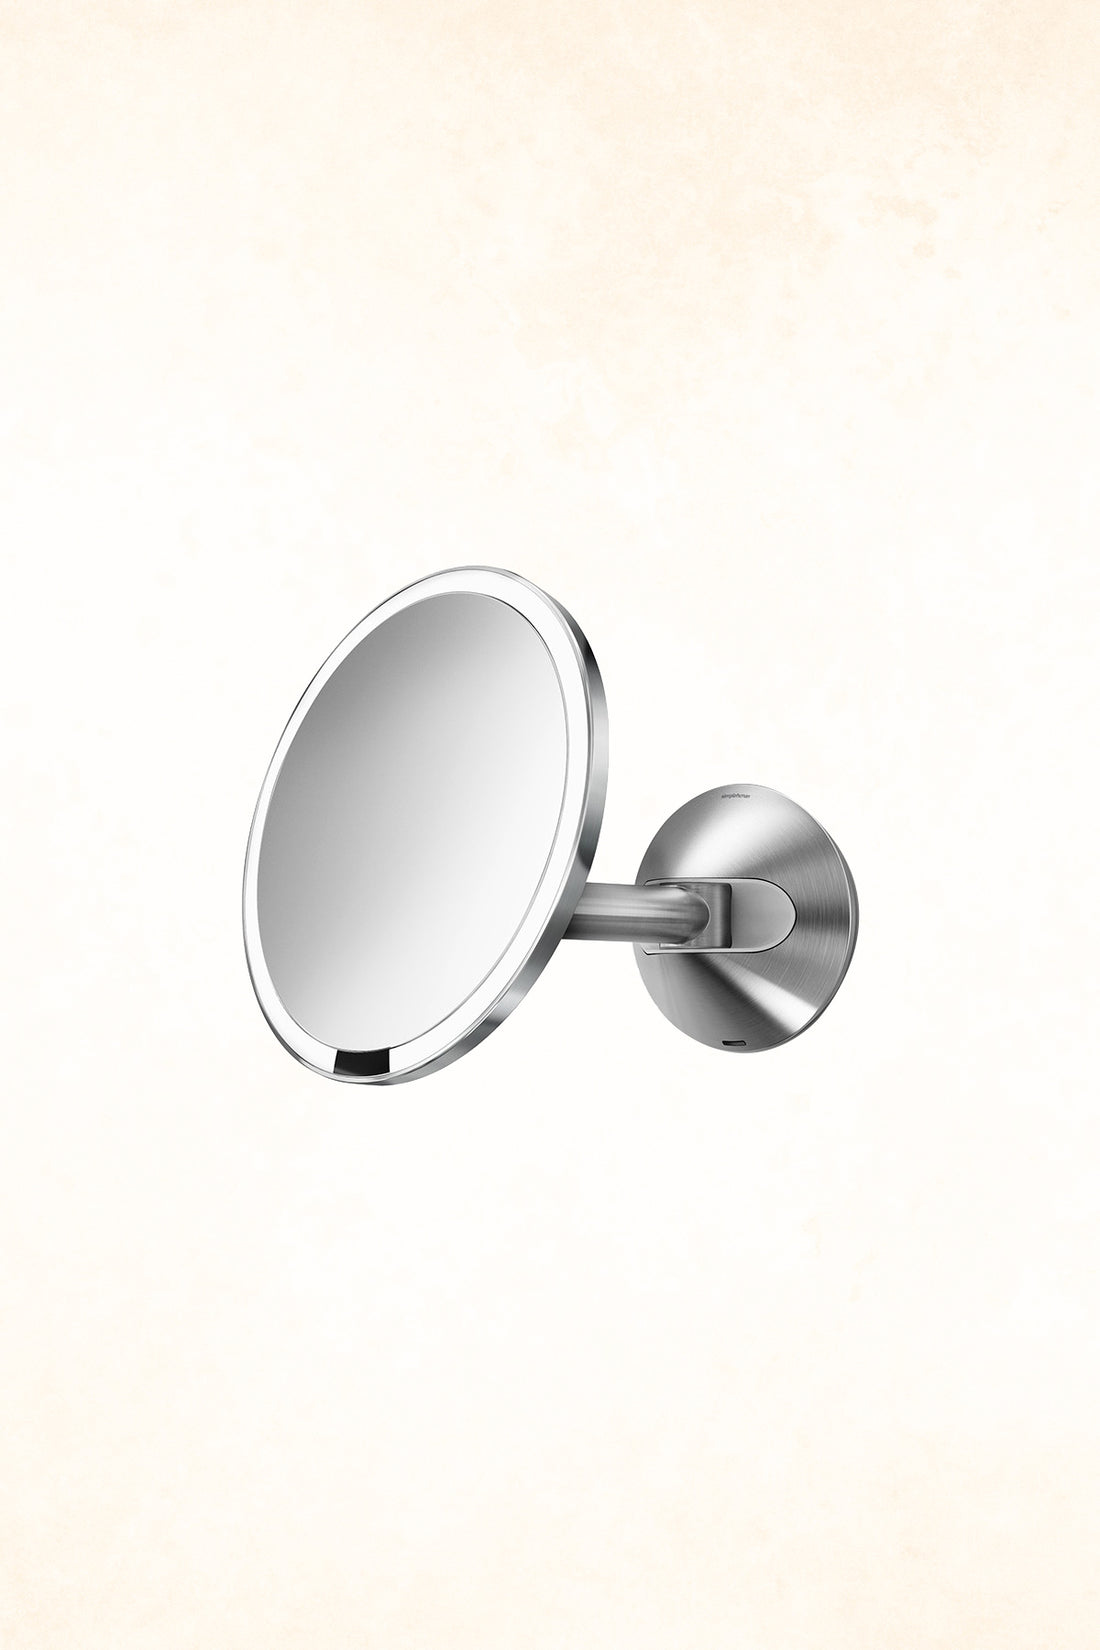 Simplehuman – 20cm sensor mirror - 5 x Magnification - Rechargeable - Brushed